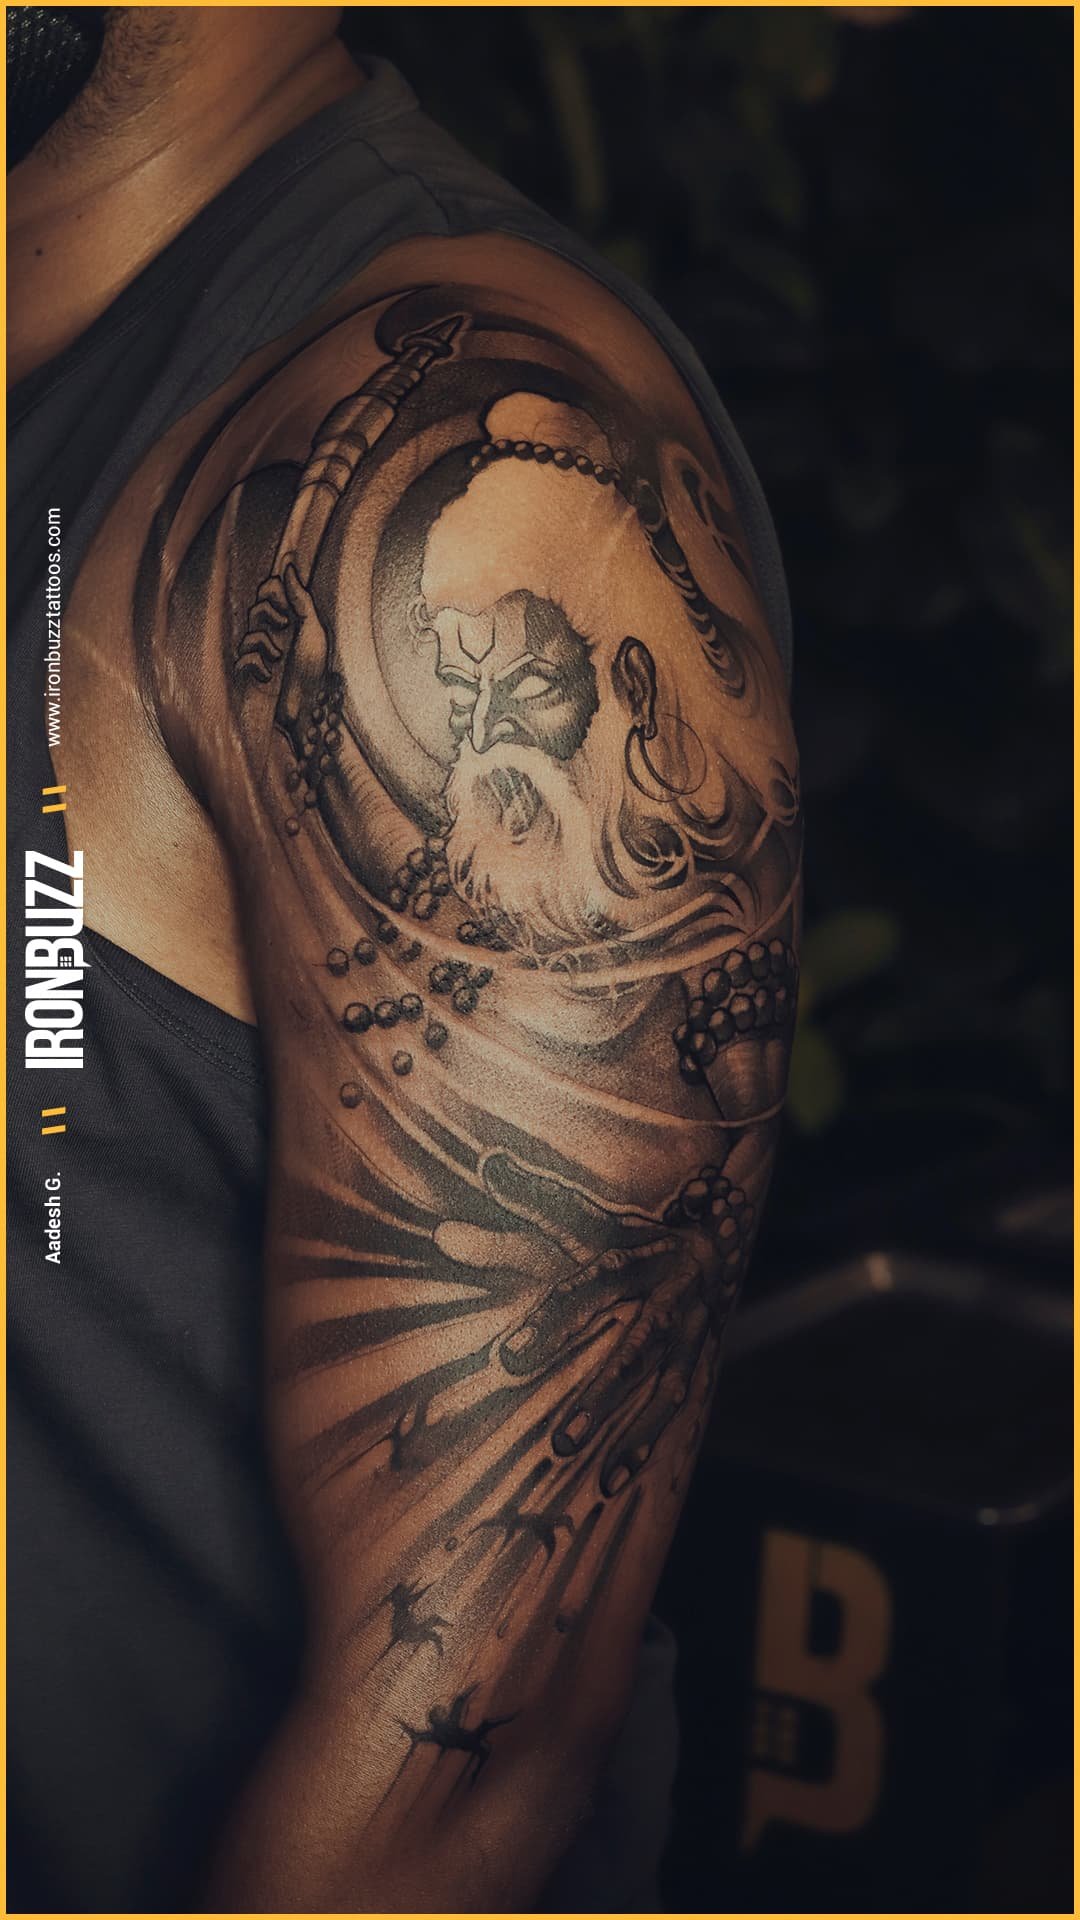 Detailed medium size pashuram hindu mythology axe religious tattoos upper arm bicep shoulder black and grey tattoo tattoo ideas female male tattoo studio artist near me iron buzz tattoos mumbai